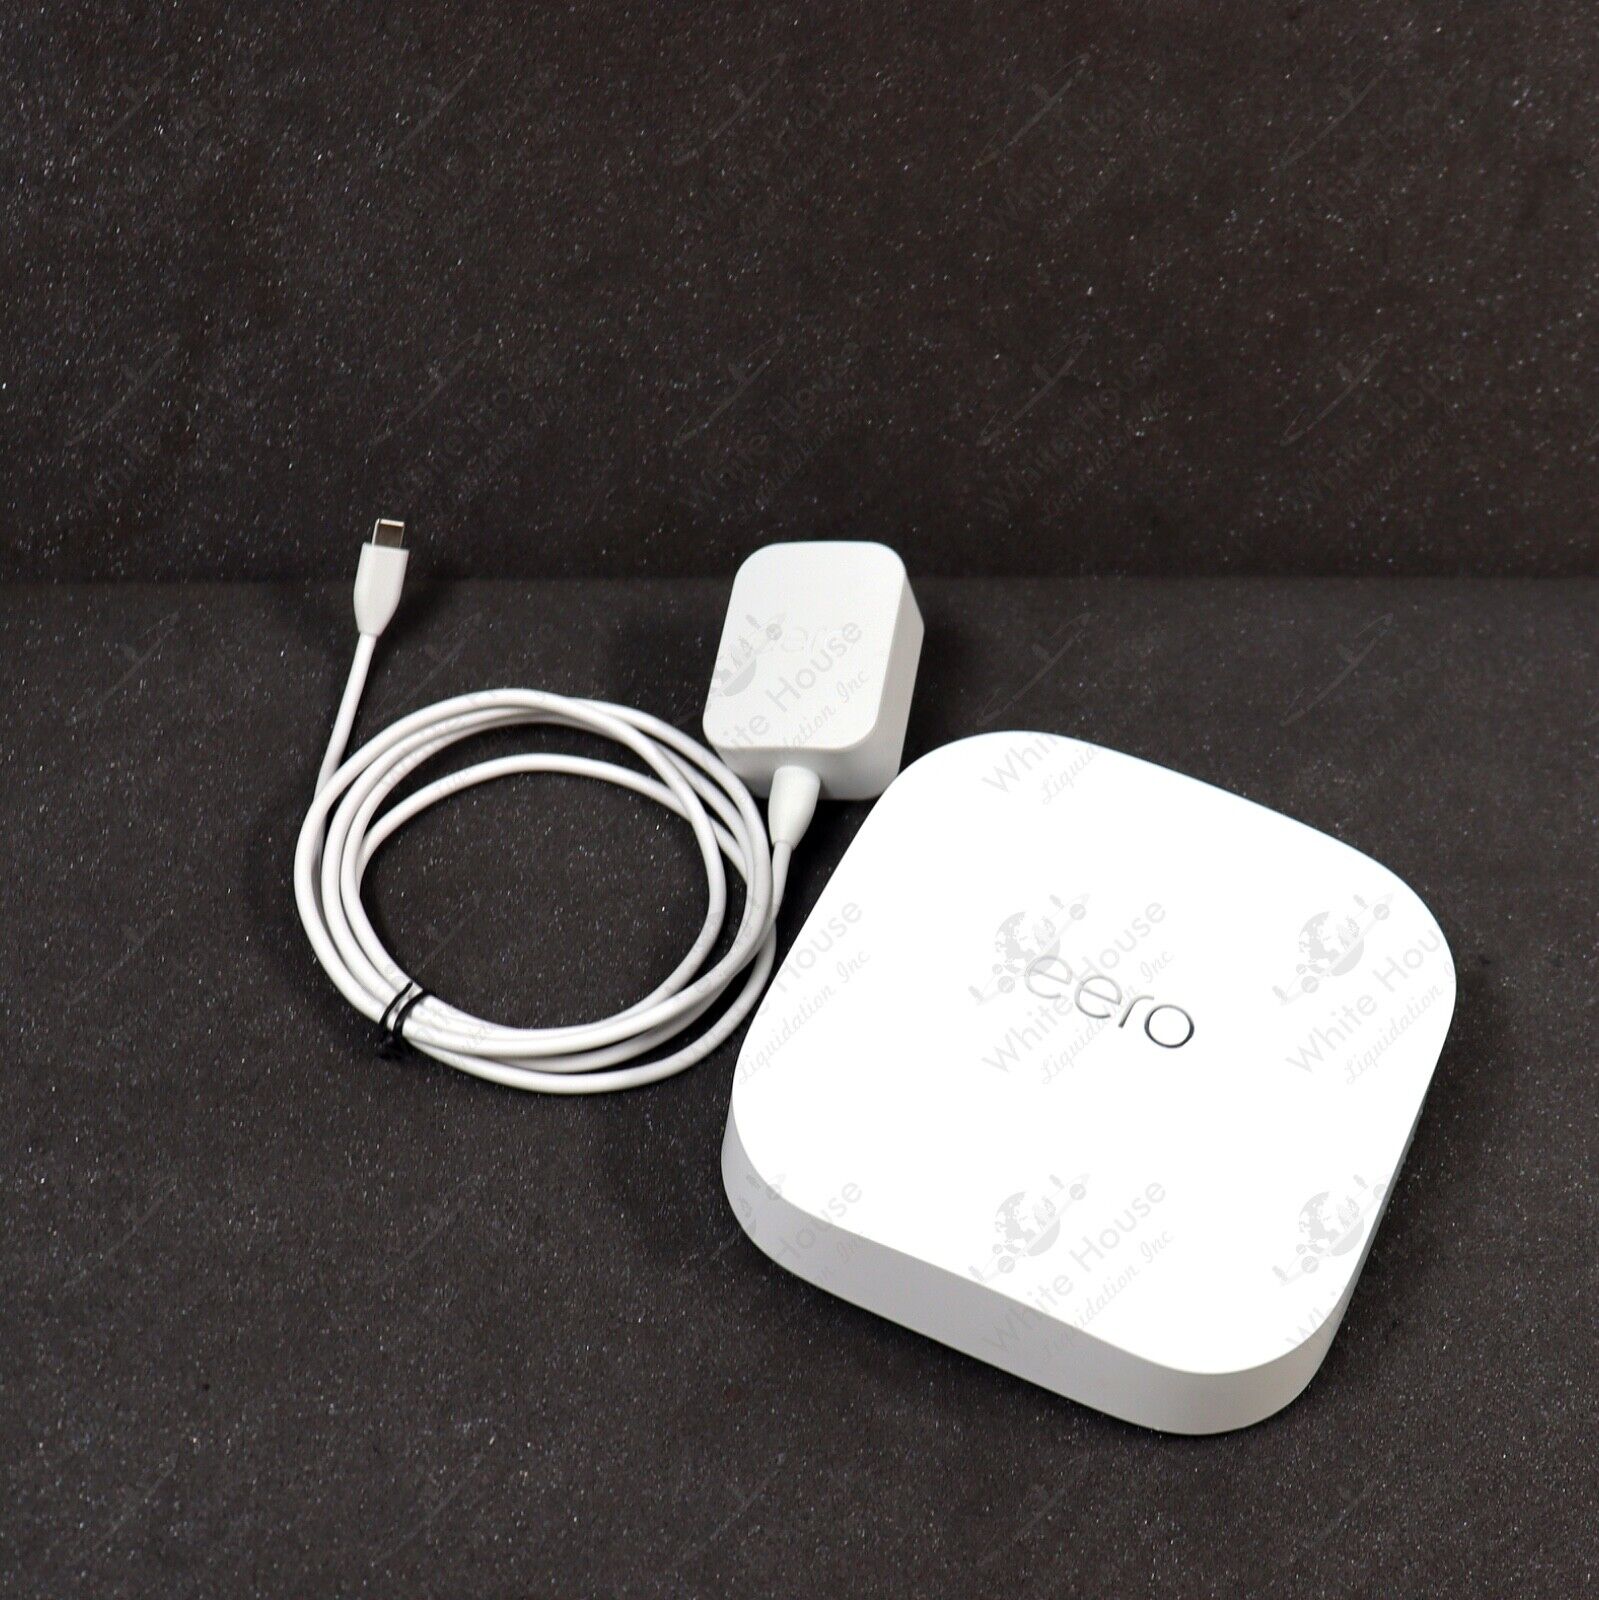 eero Pro 6E AX5400 Tri-Band Gigabit Mesh System S010111 - White